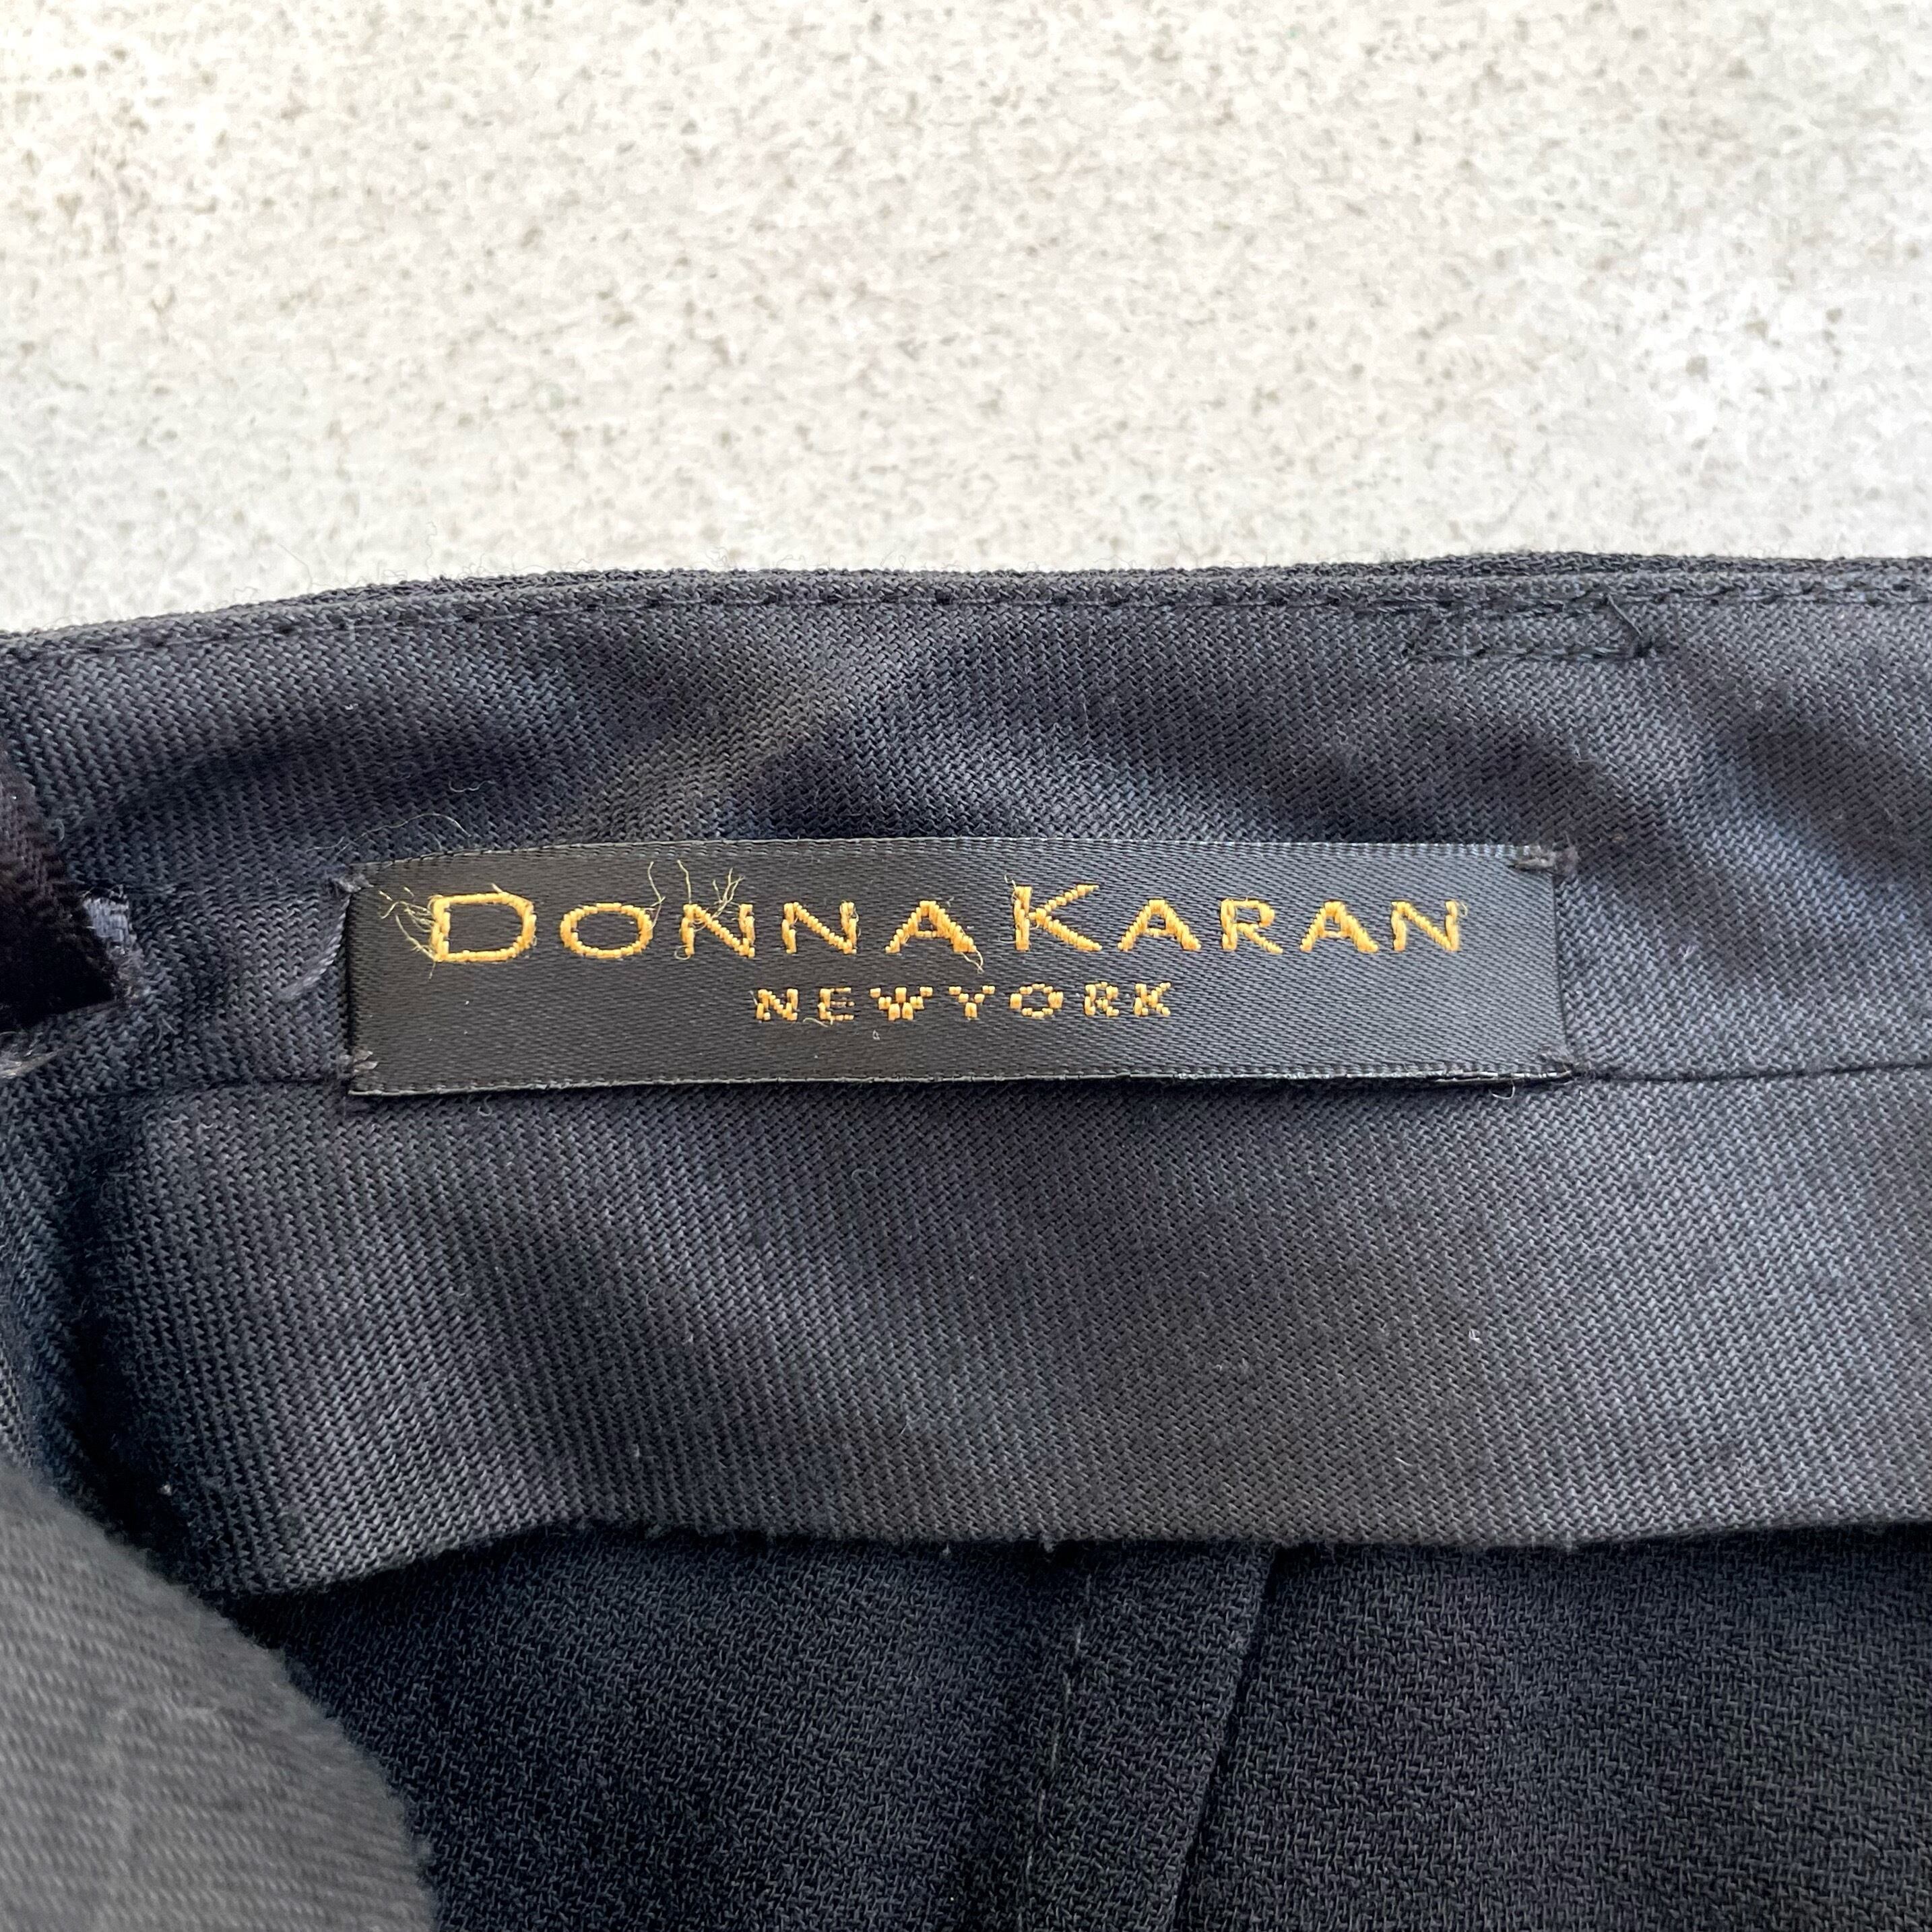 Donna karan newyork